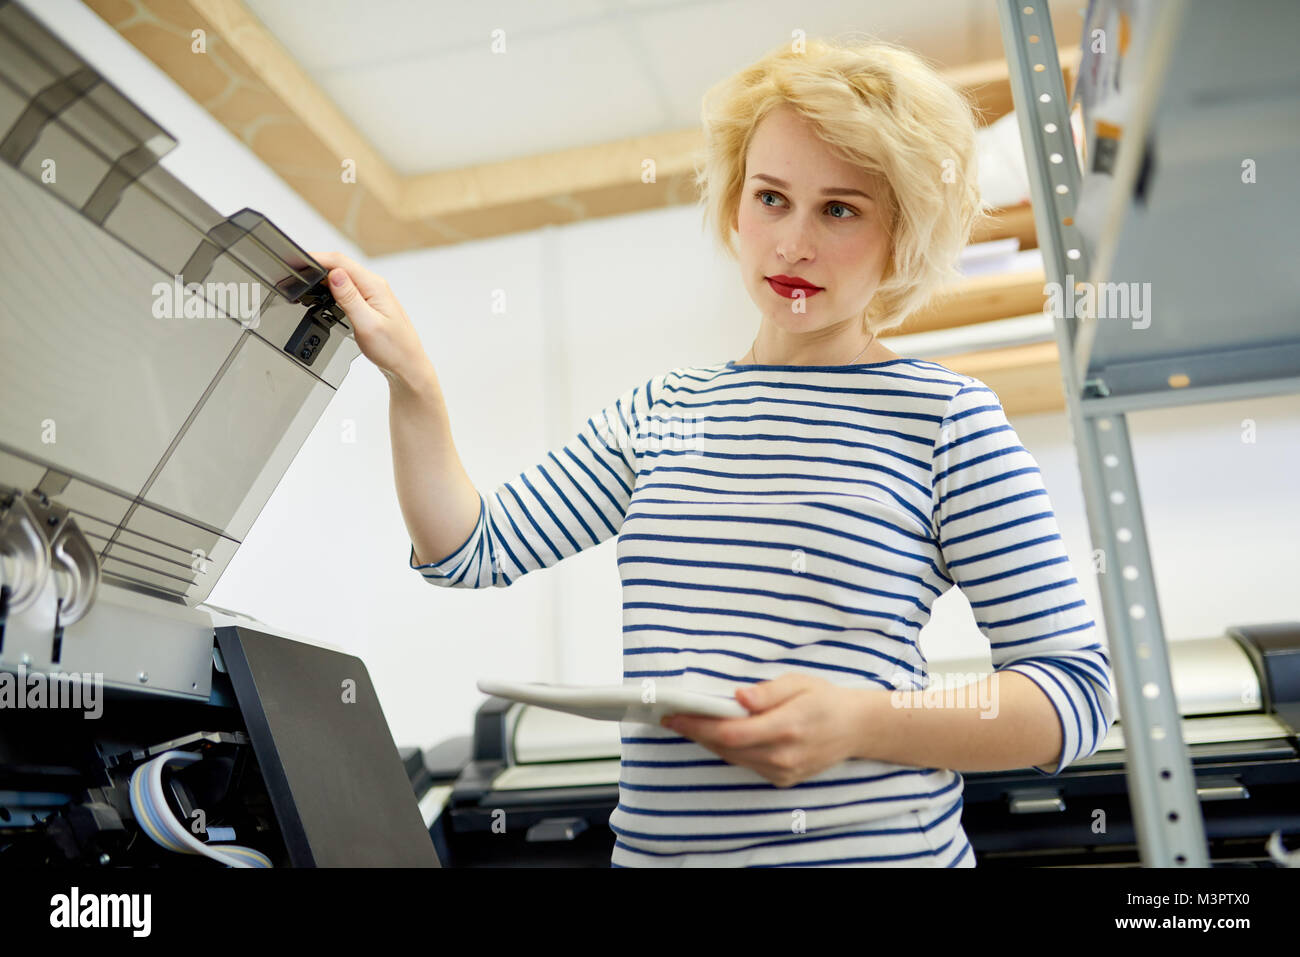 Woman Using Copy Machine Stock Photo